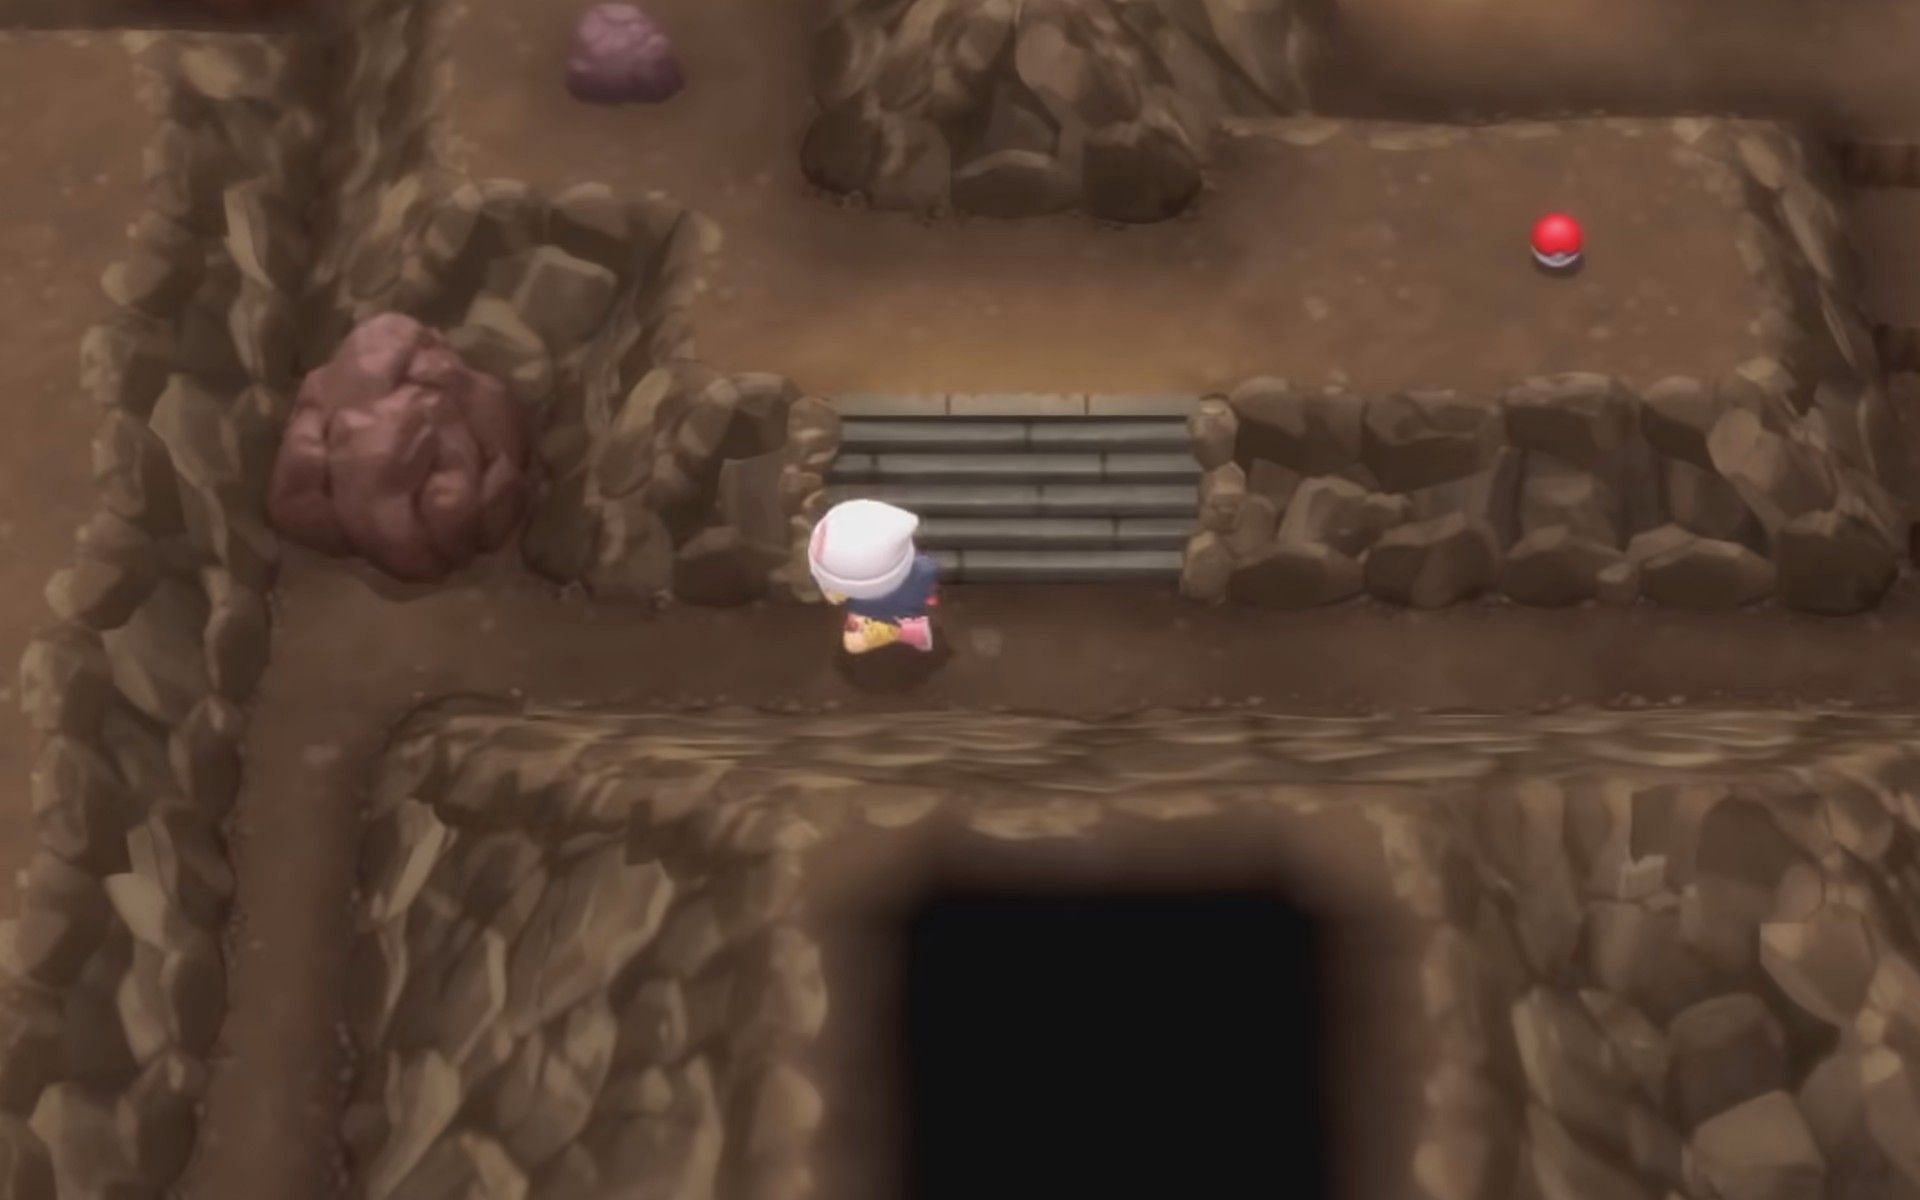 Flash can help illuminate dark caves (Image via Nintendo)